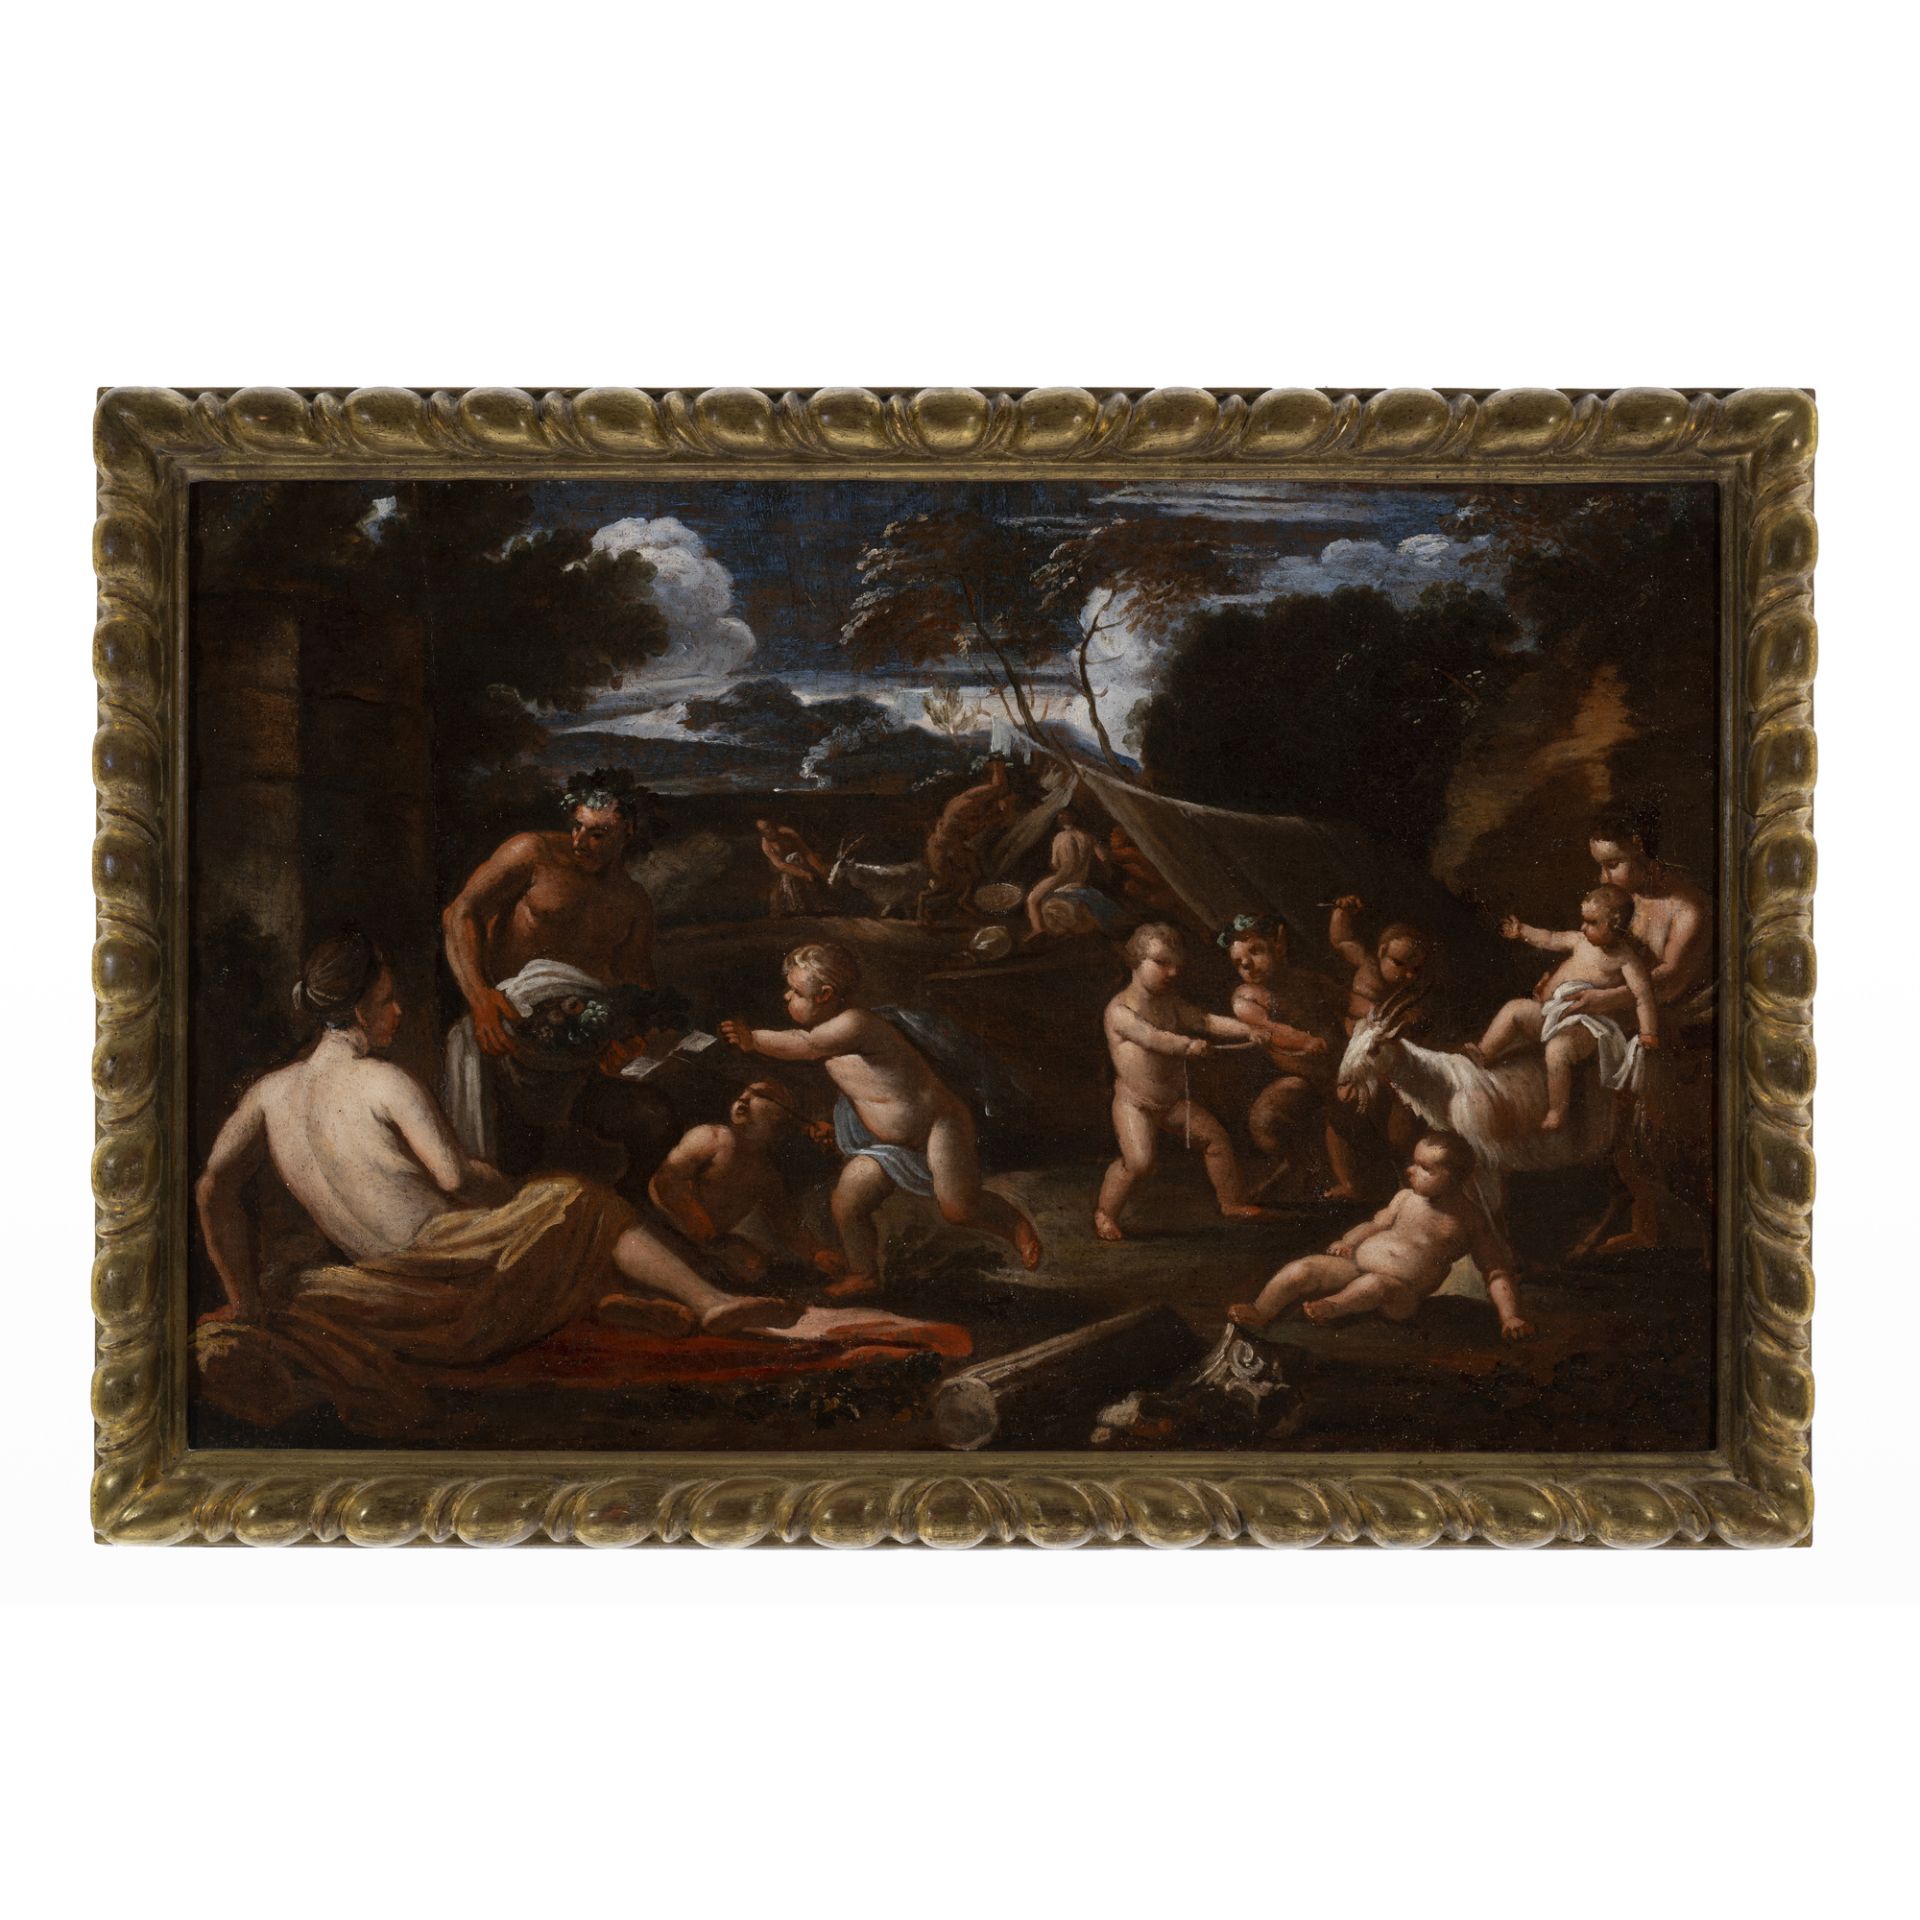 Bottega/cerchia di Nicolas Poussin (Les Andelys 1594 - Roma 1665)